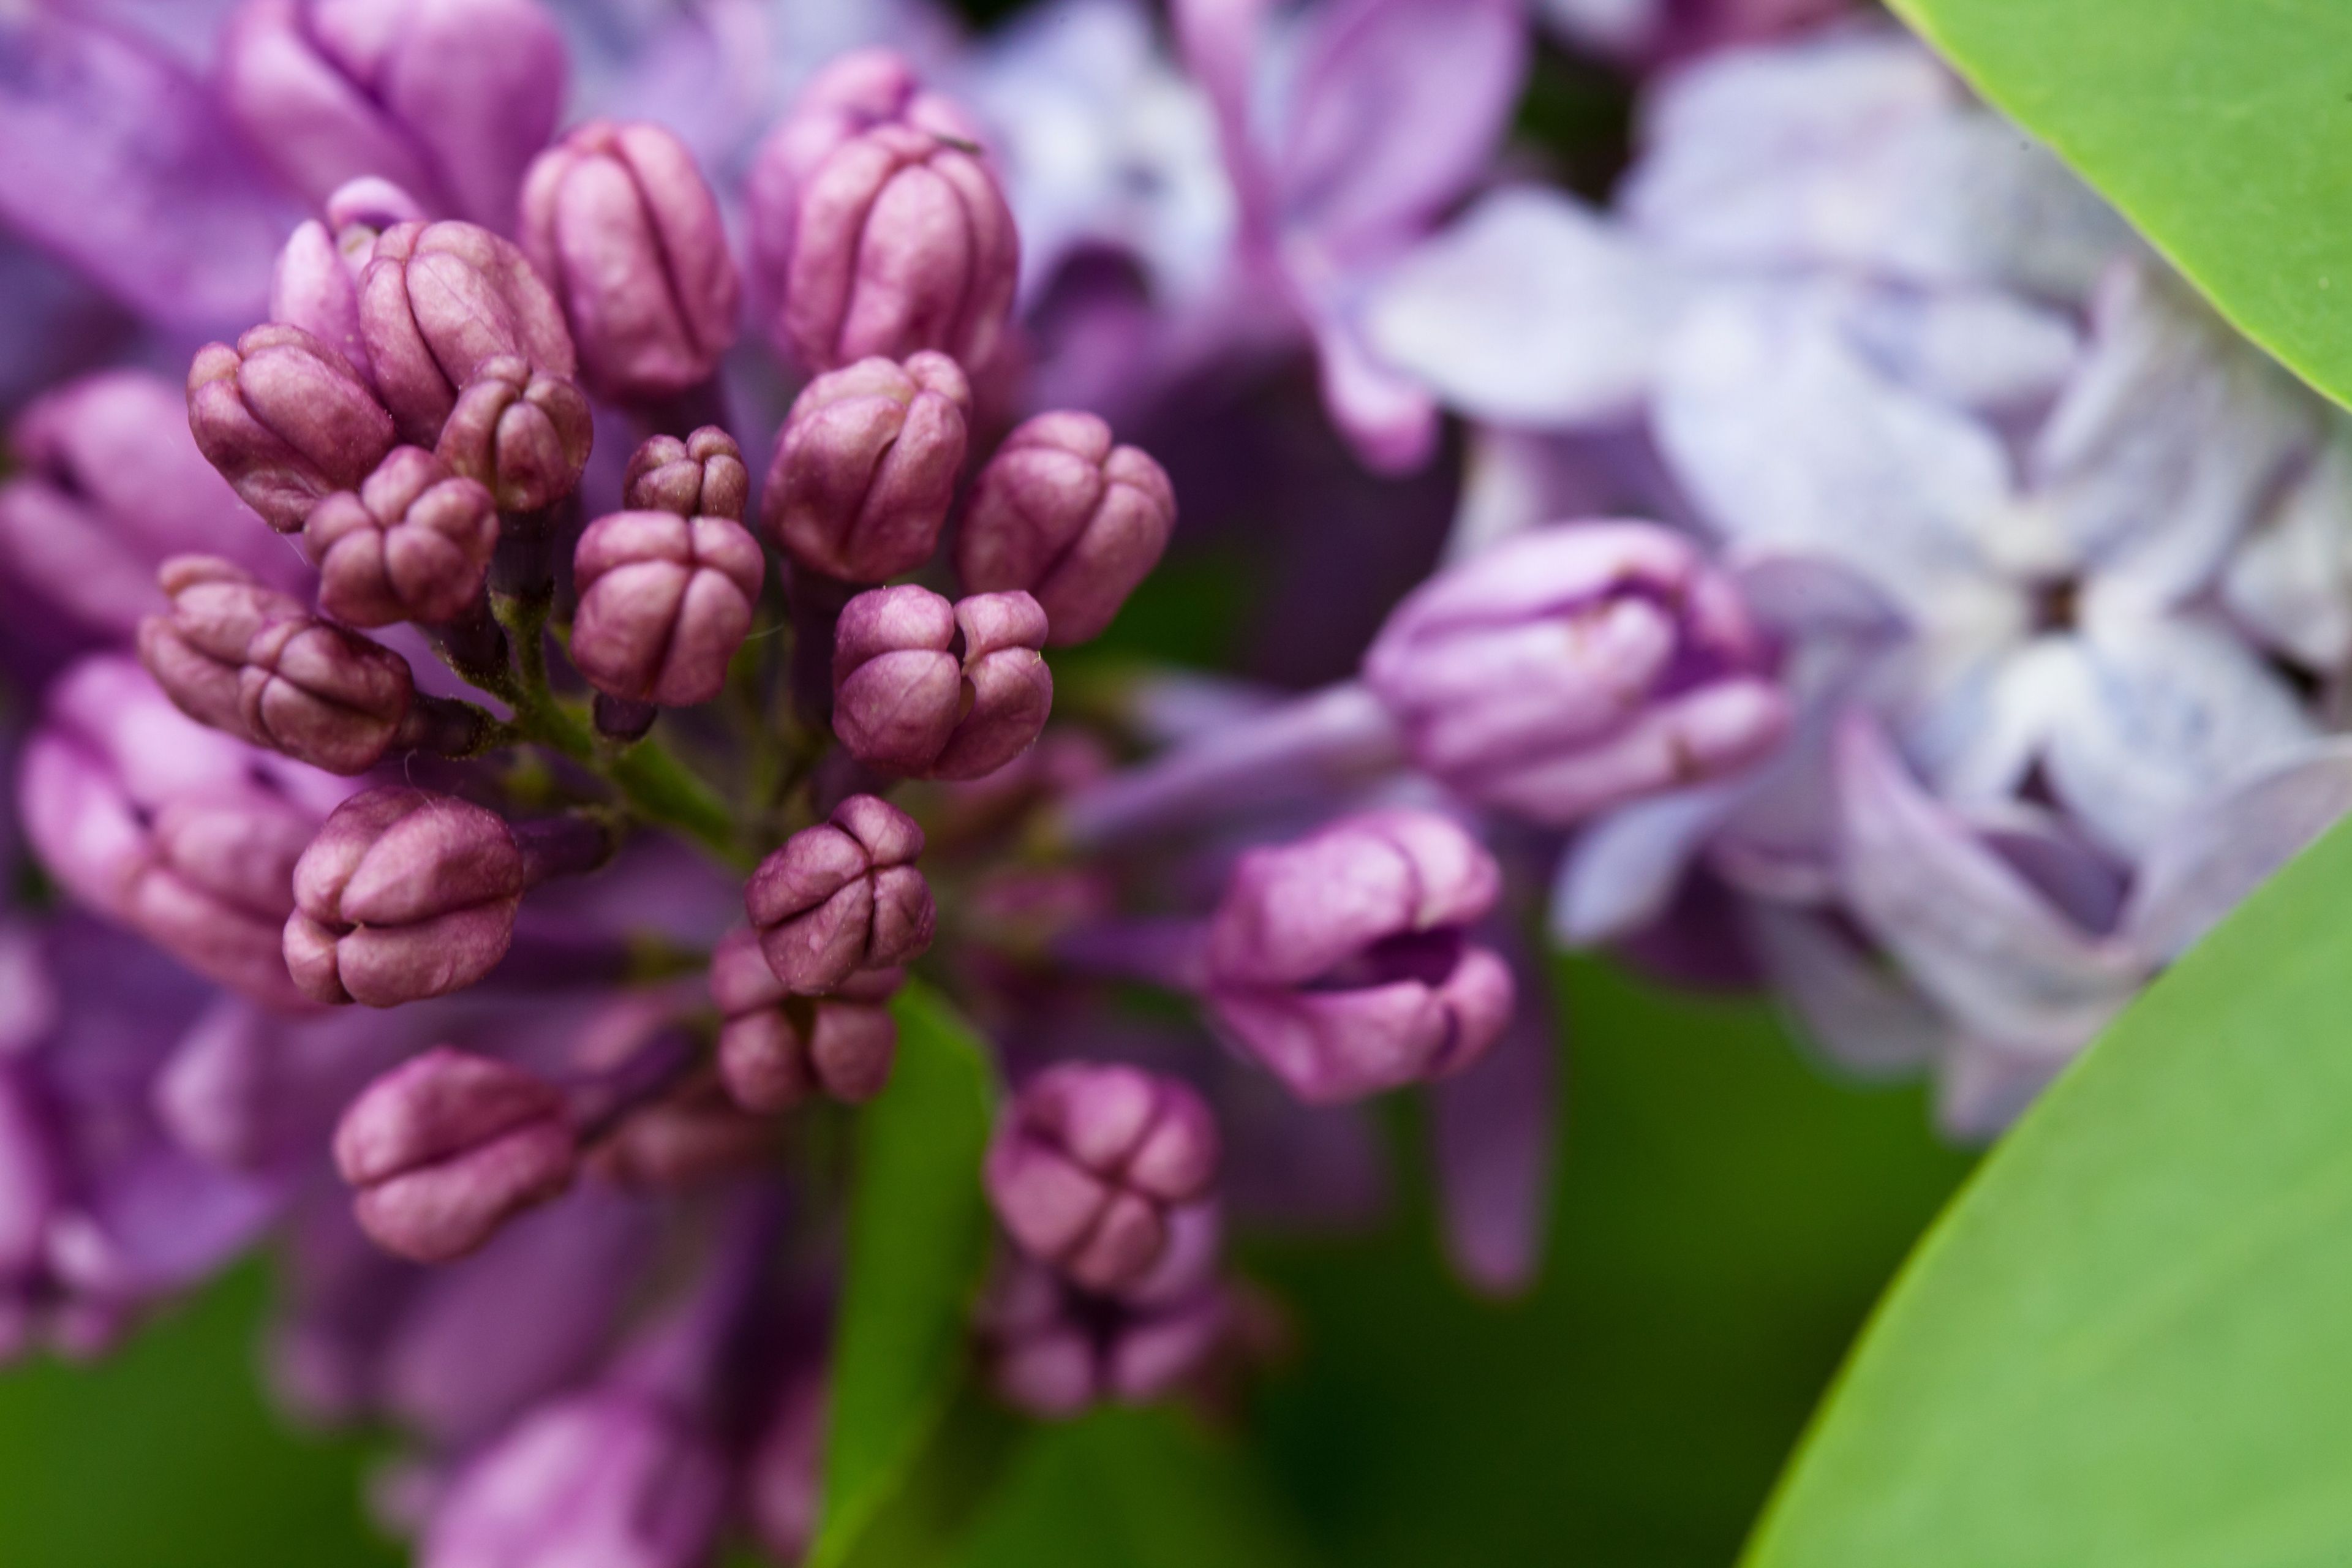 A close-up image of lilacs.